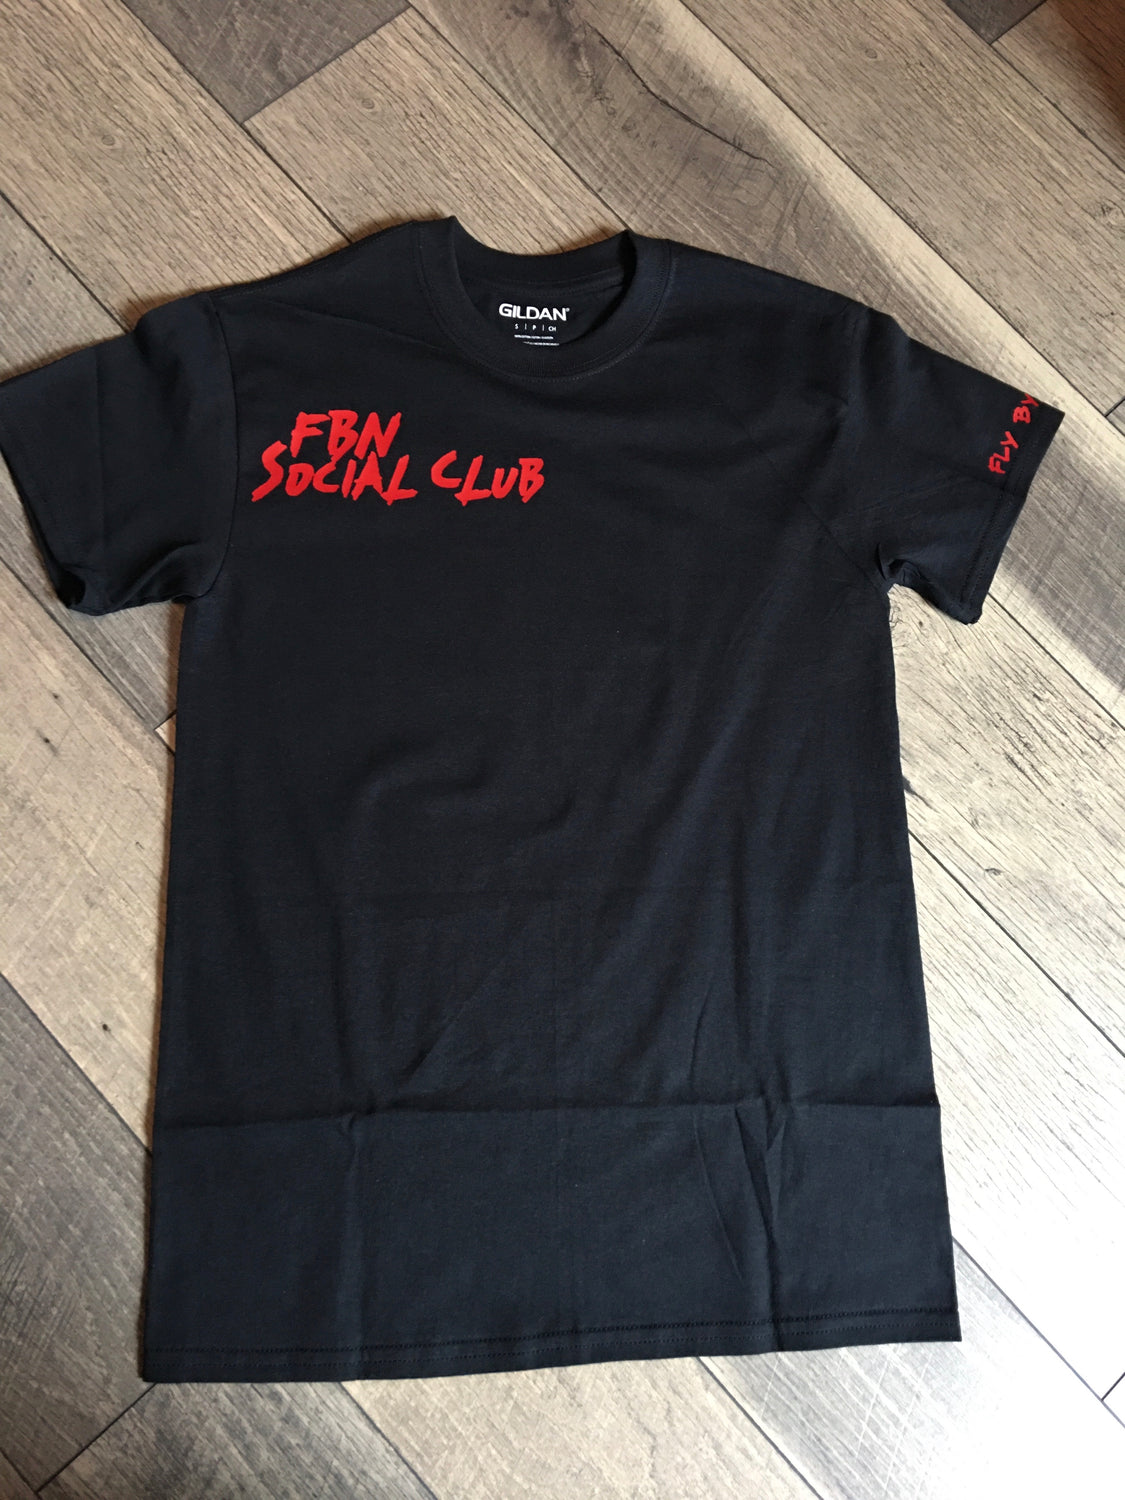 FBN Social Club T Shirt (Black)